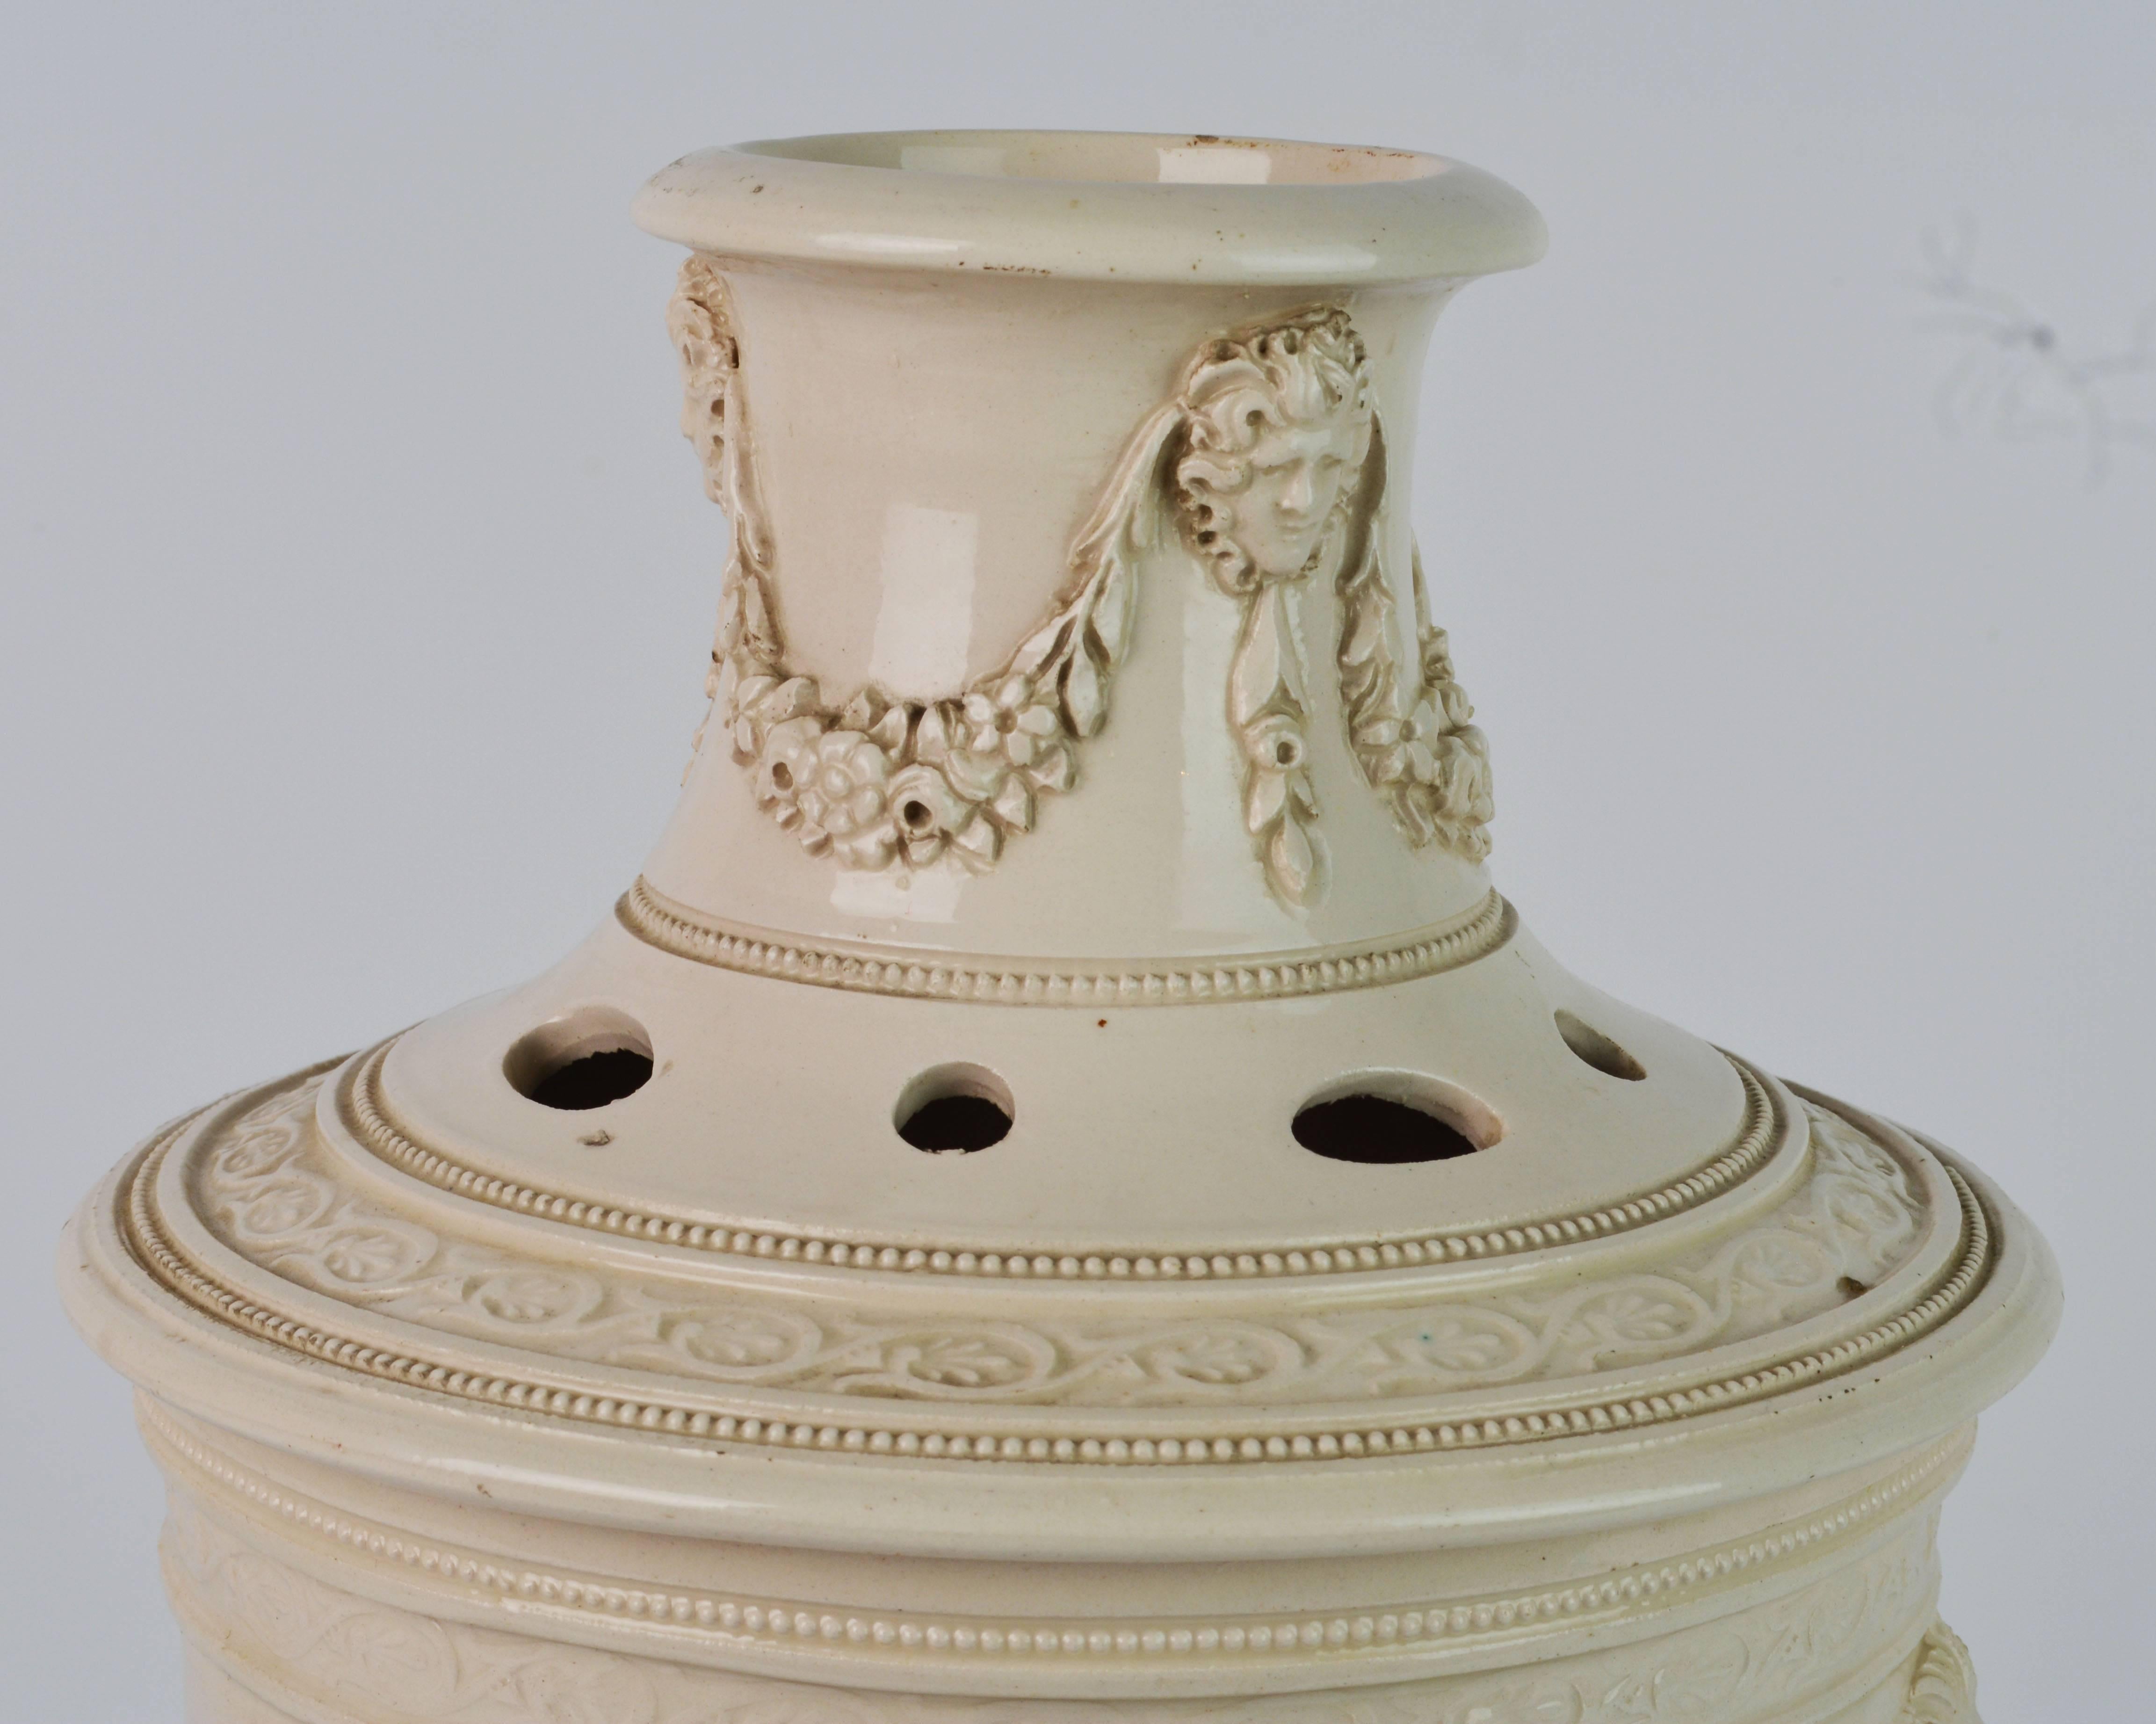 English Rare 18th Century Leeds Cream Ware Covered Potpourri Jar or Urn